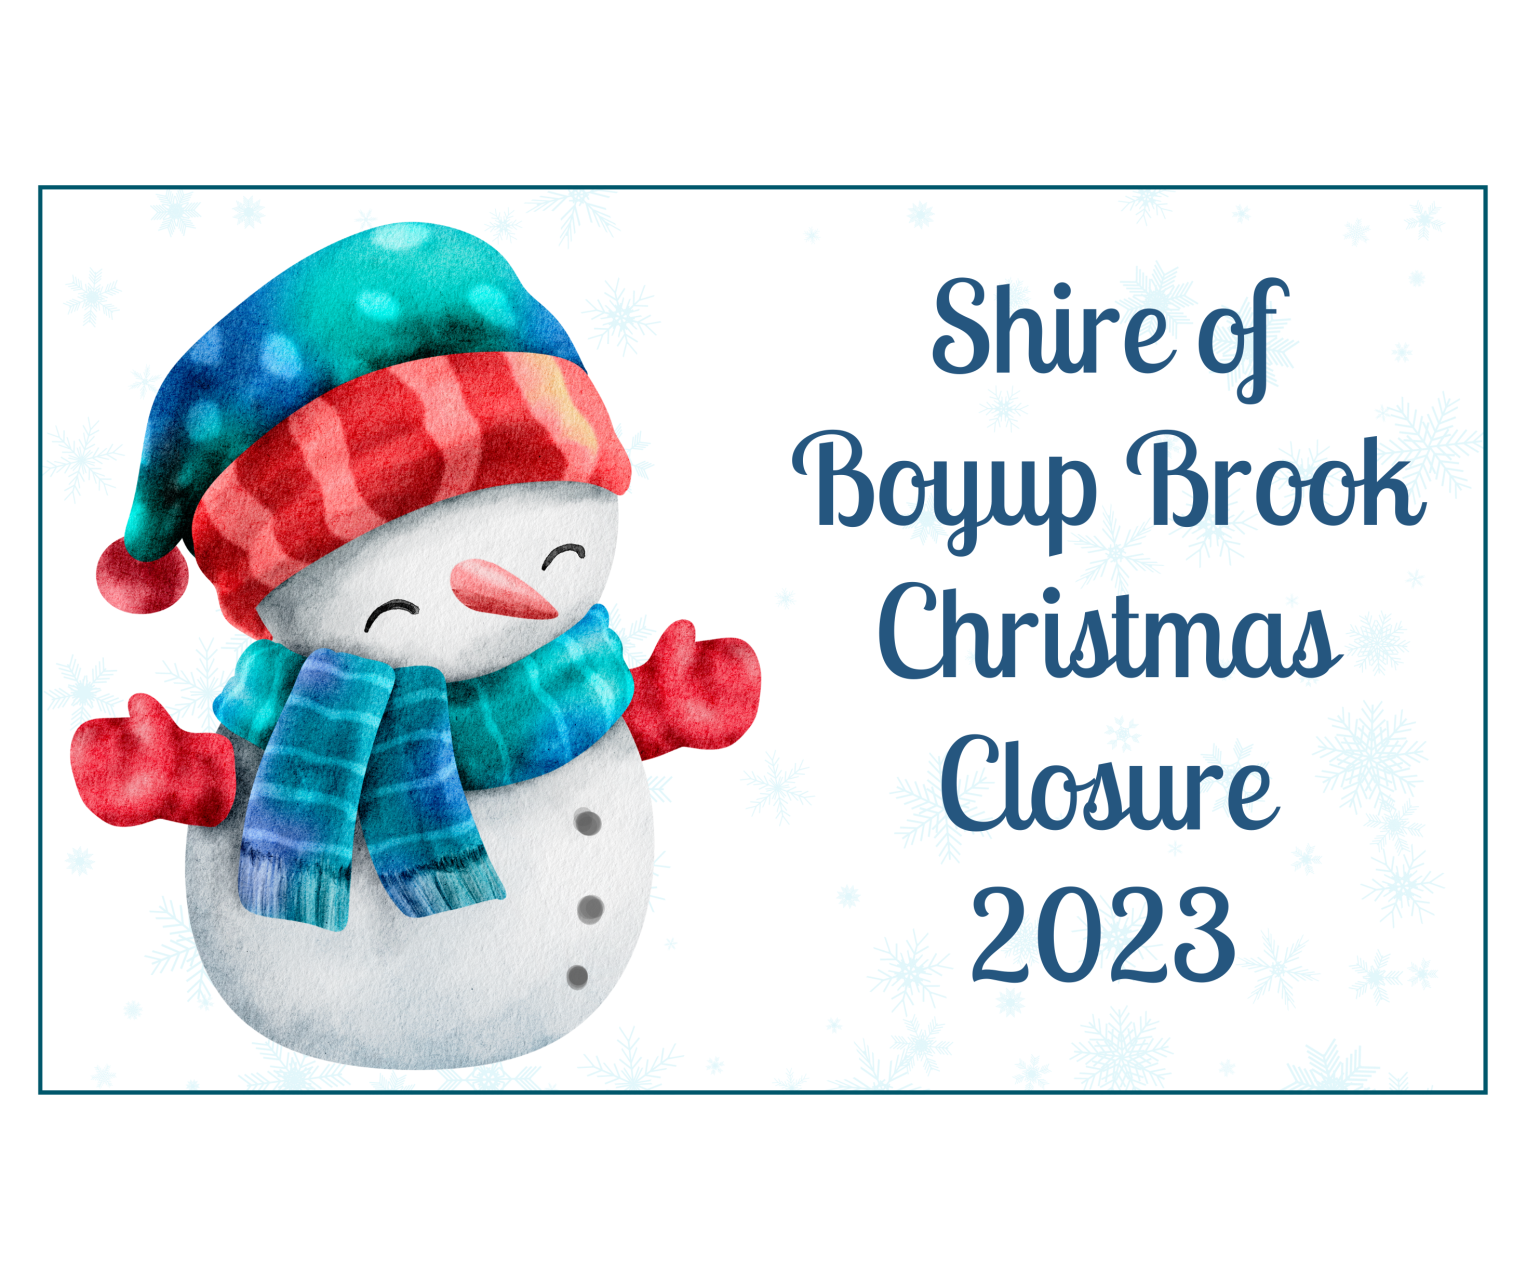 Shire of Boyup Brook Christmas Closure Dates 2023